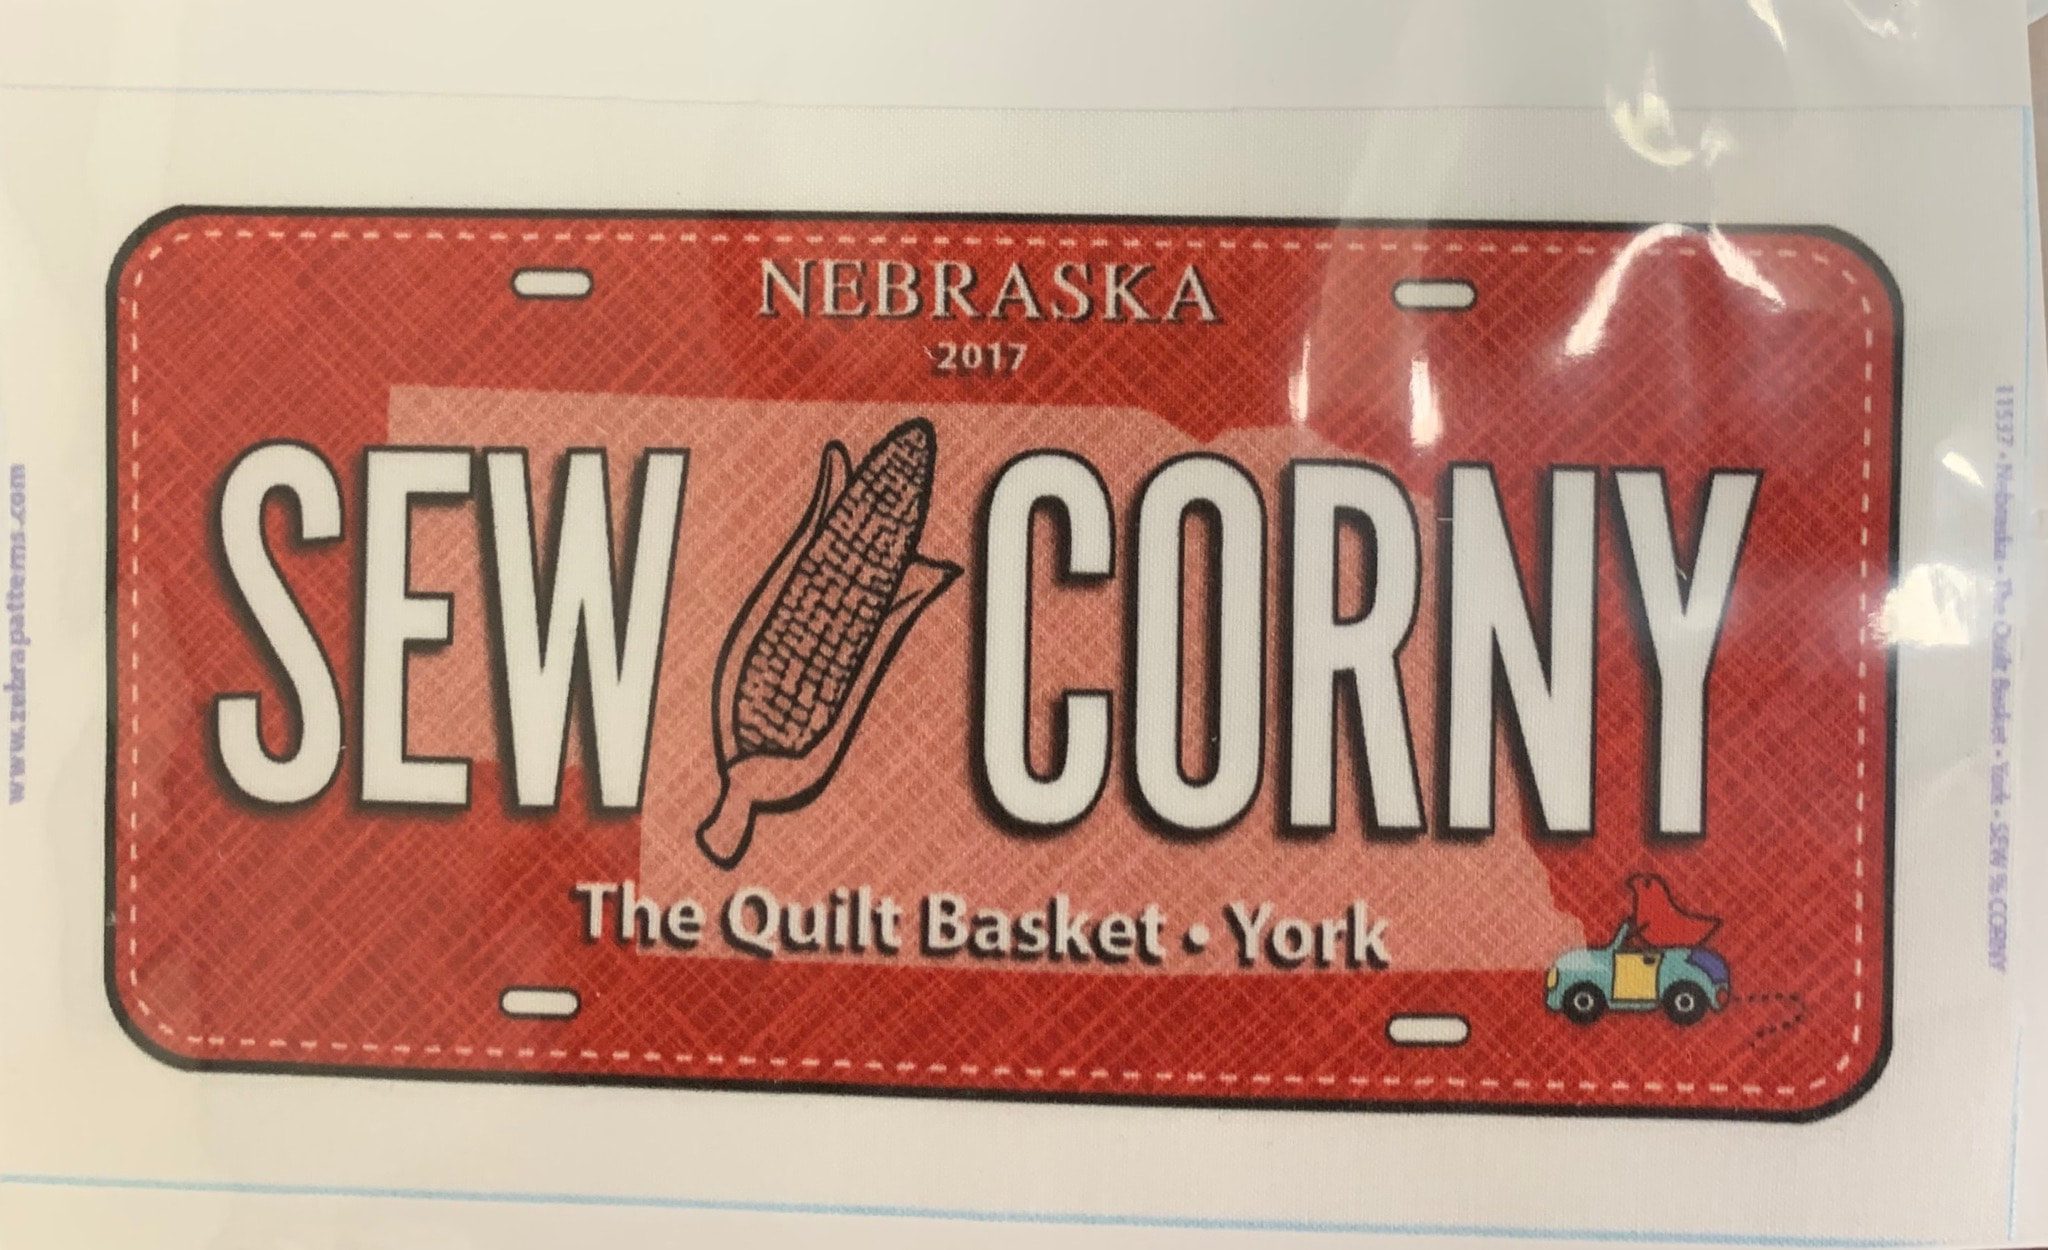 Row by Row 2017 Sew Corny - License Plate